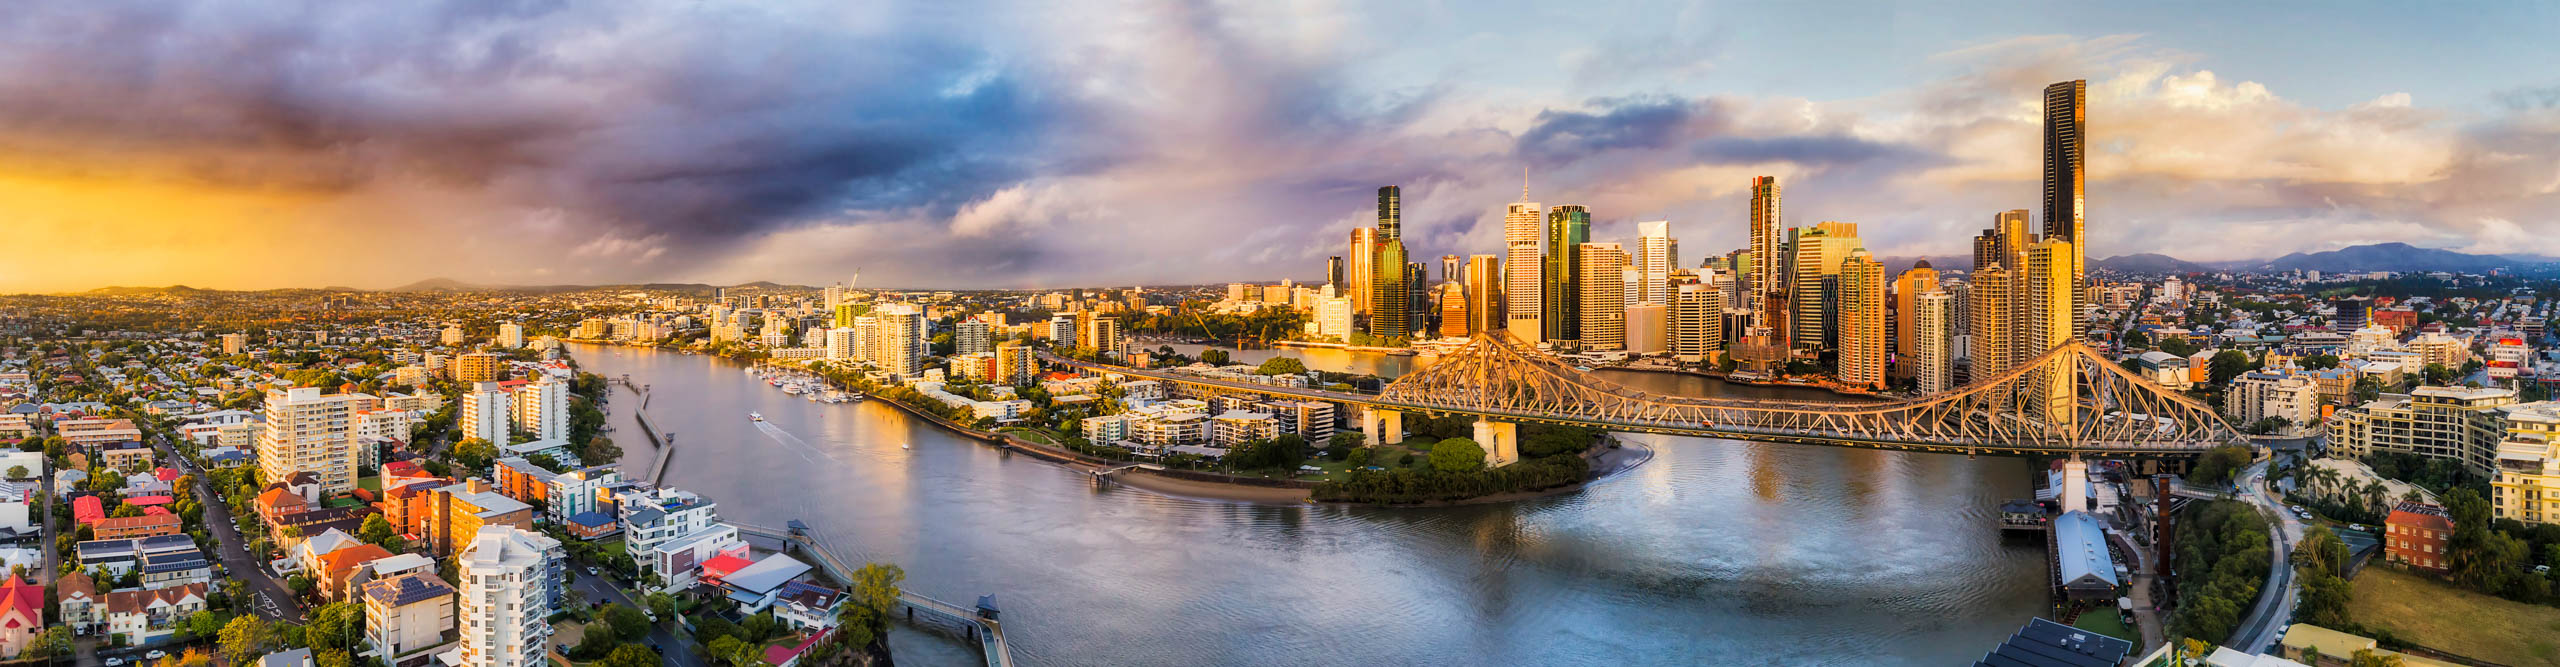 View of stormy skies over Brisbane skyline, Queensland, Australia 